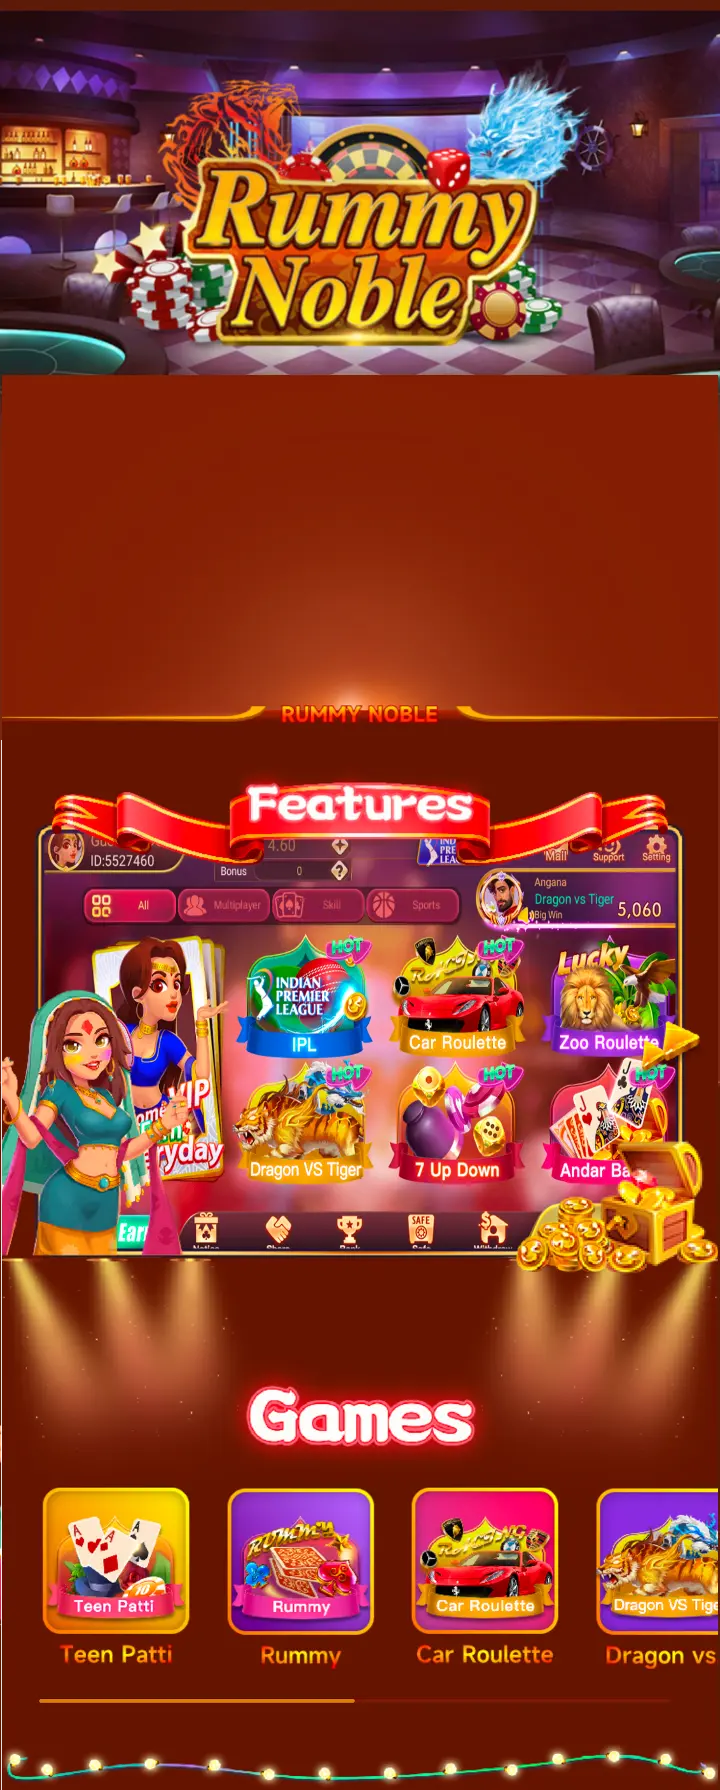 Rummy Noble APK, Rummy Noble App Download, Rummy Noble ₹51 Bonus